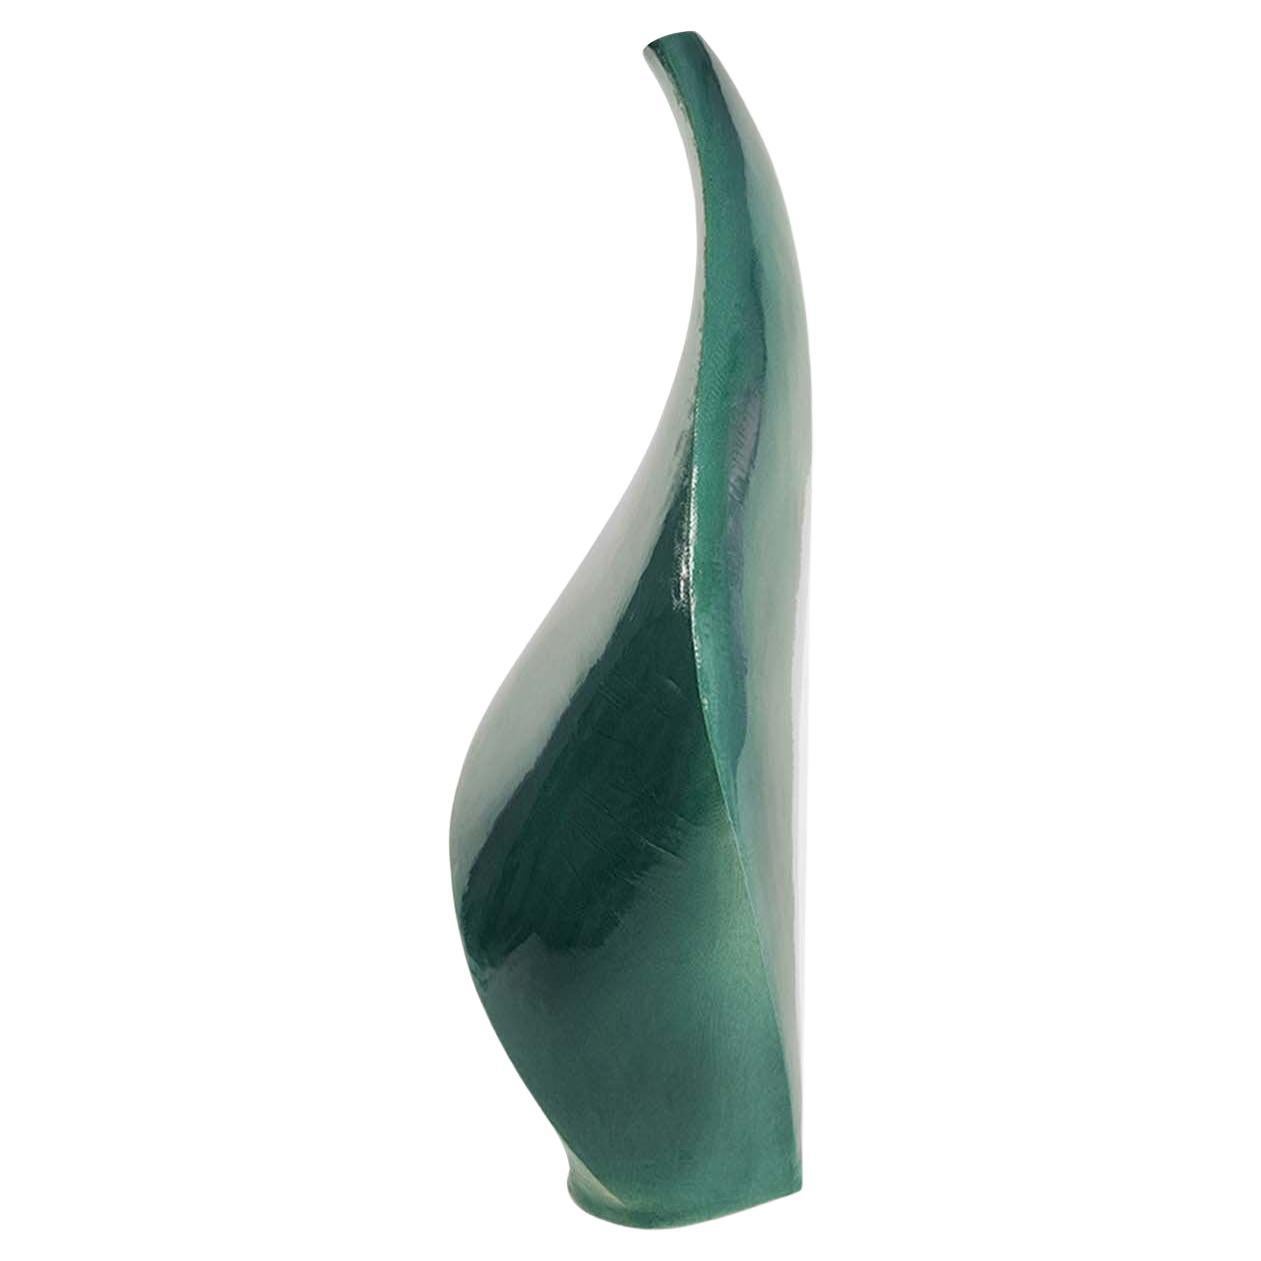 Demeter Green Sculptural Vase with Curved Lip #1